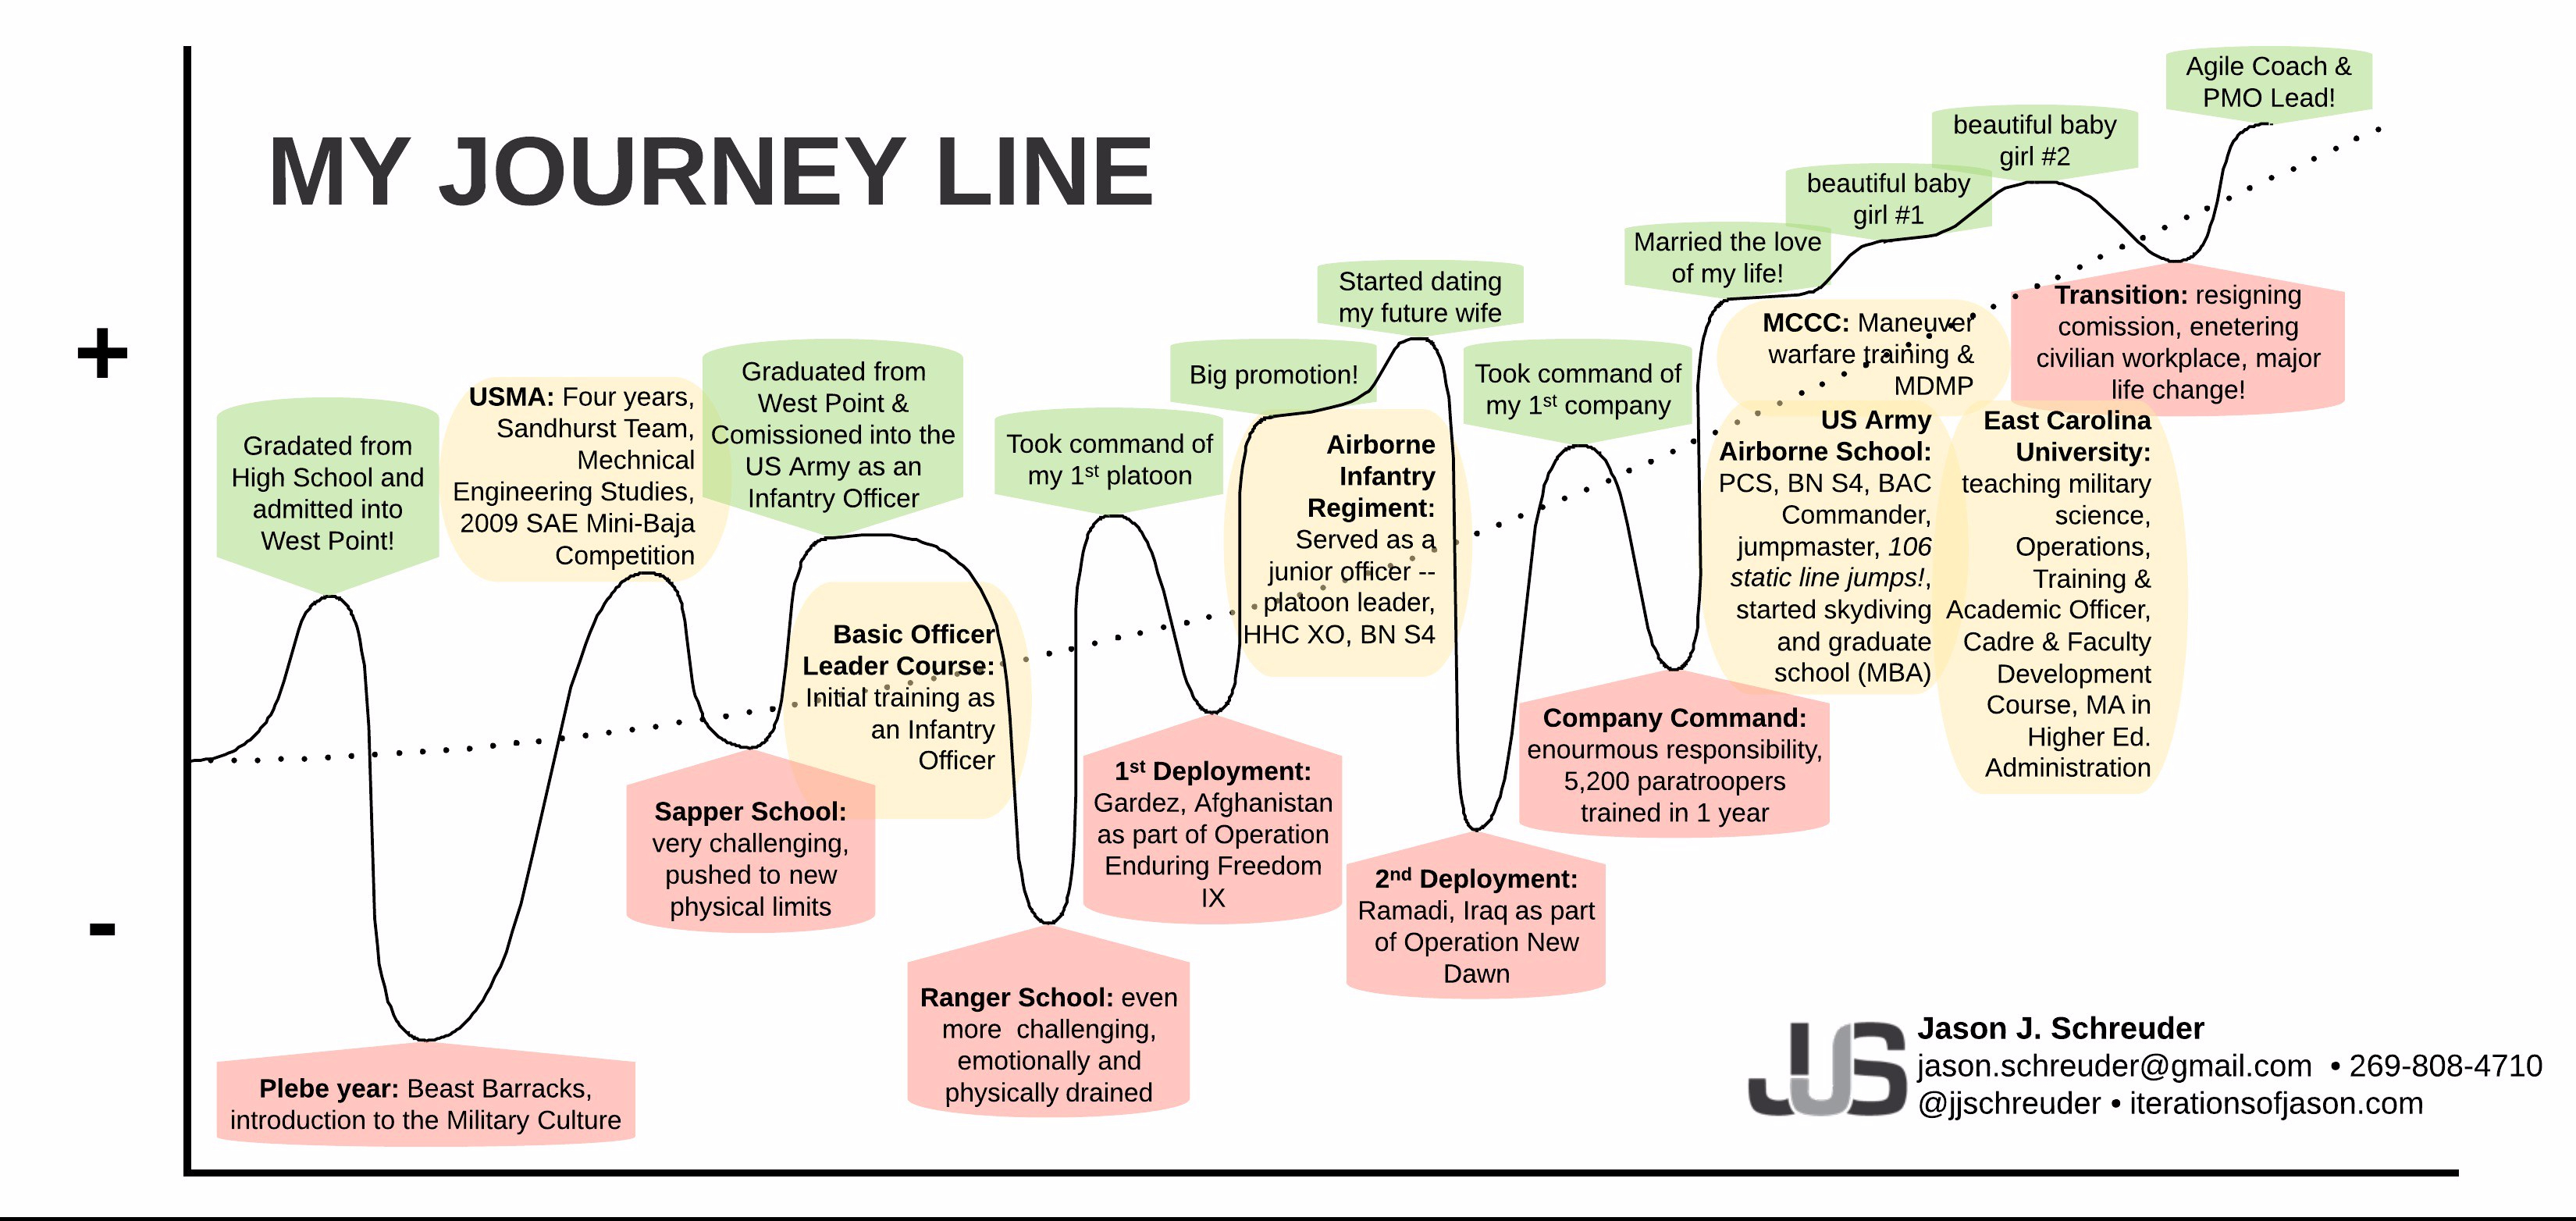 I like journey. Journey Journey 1975. Линия Journey. Agile coach функции. Проект my last Journey.